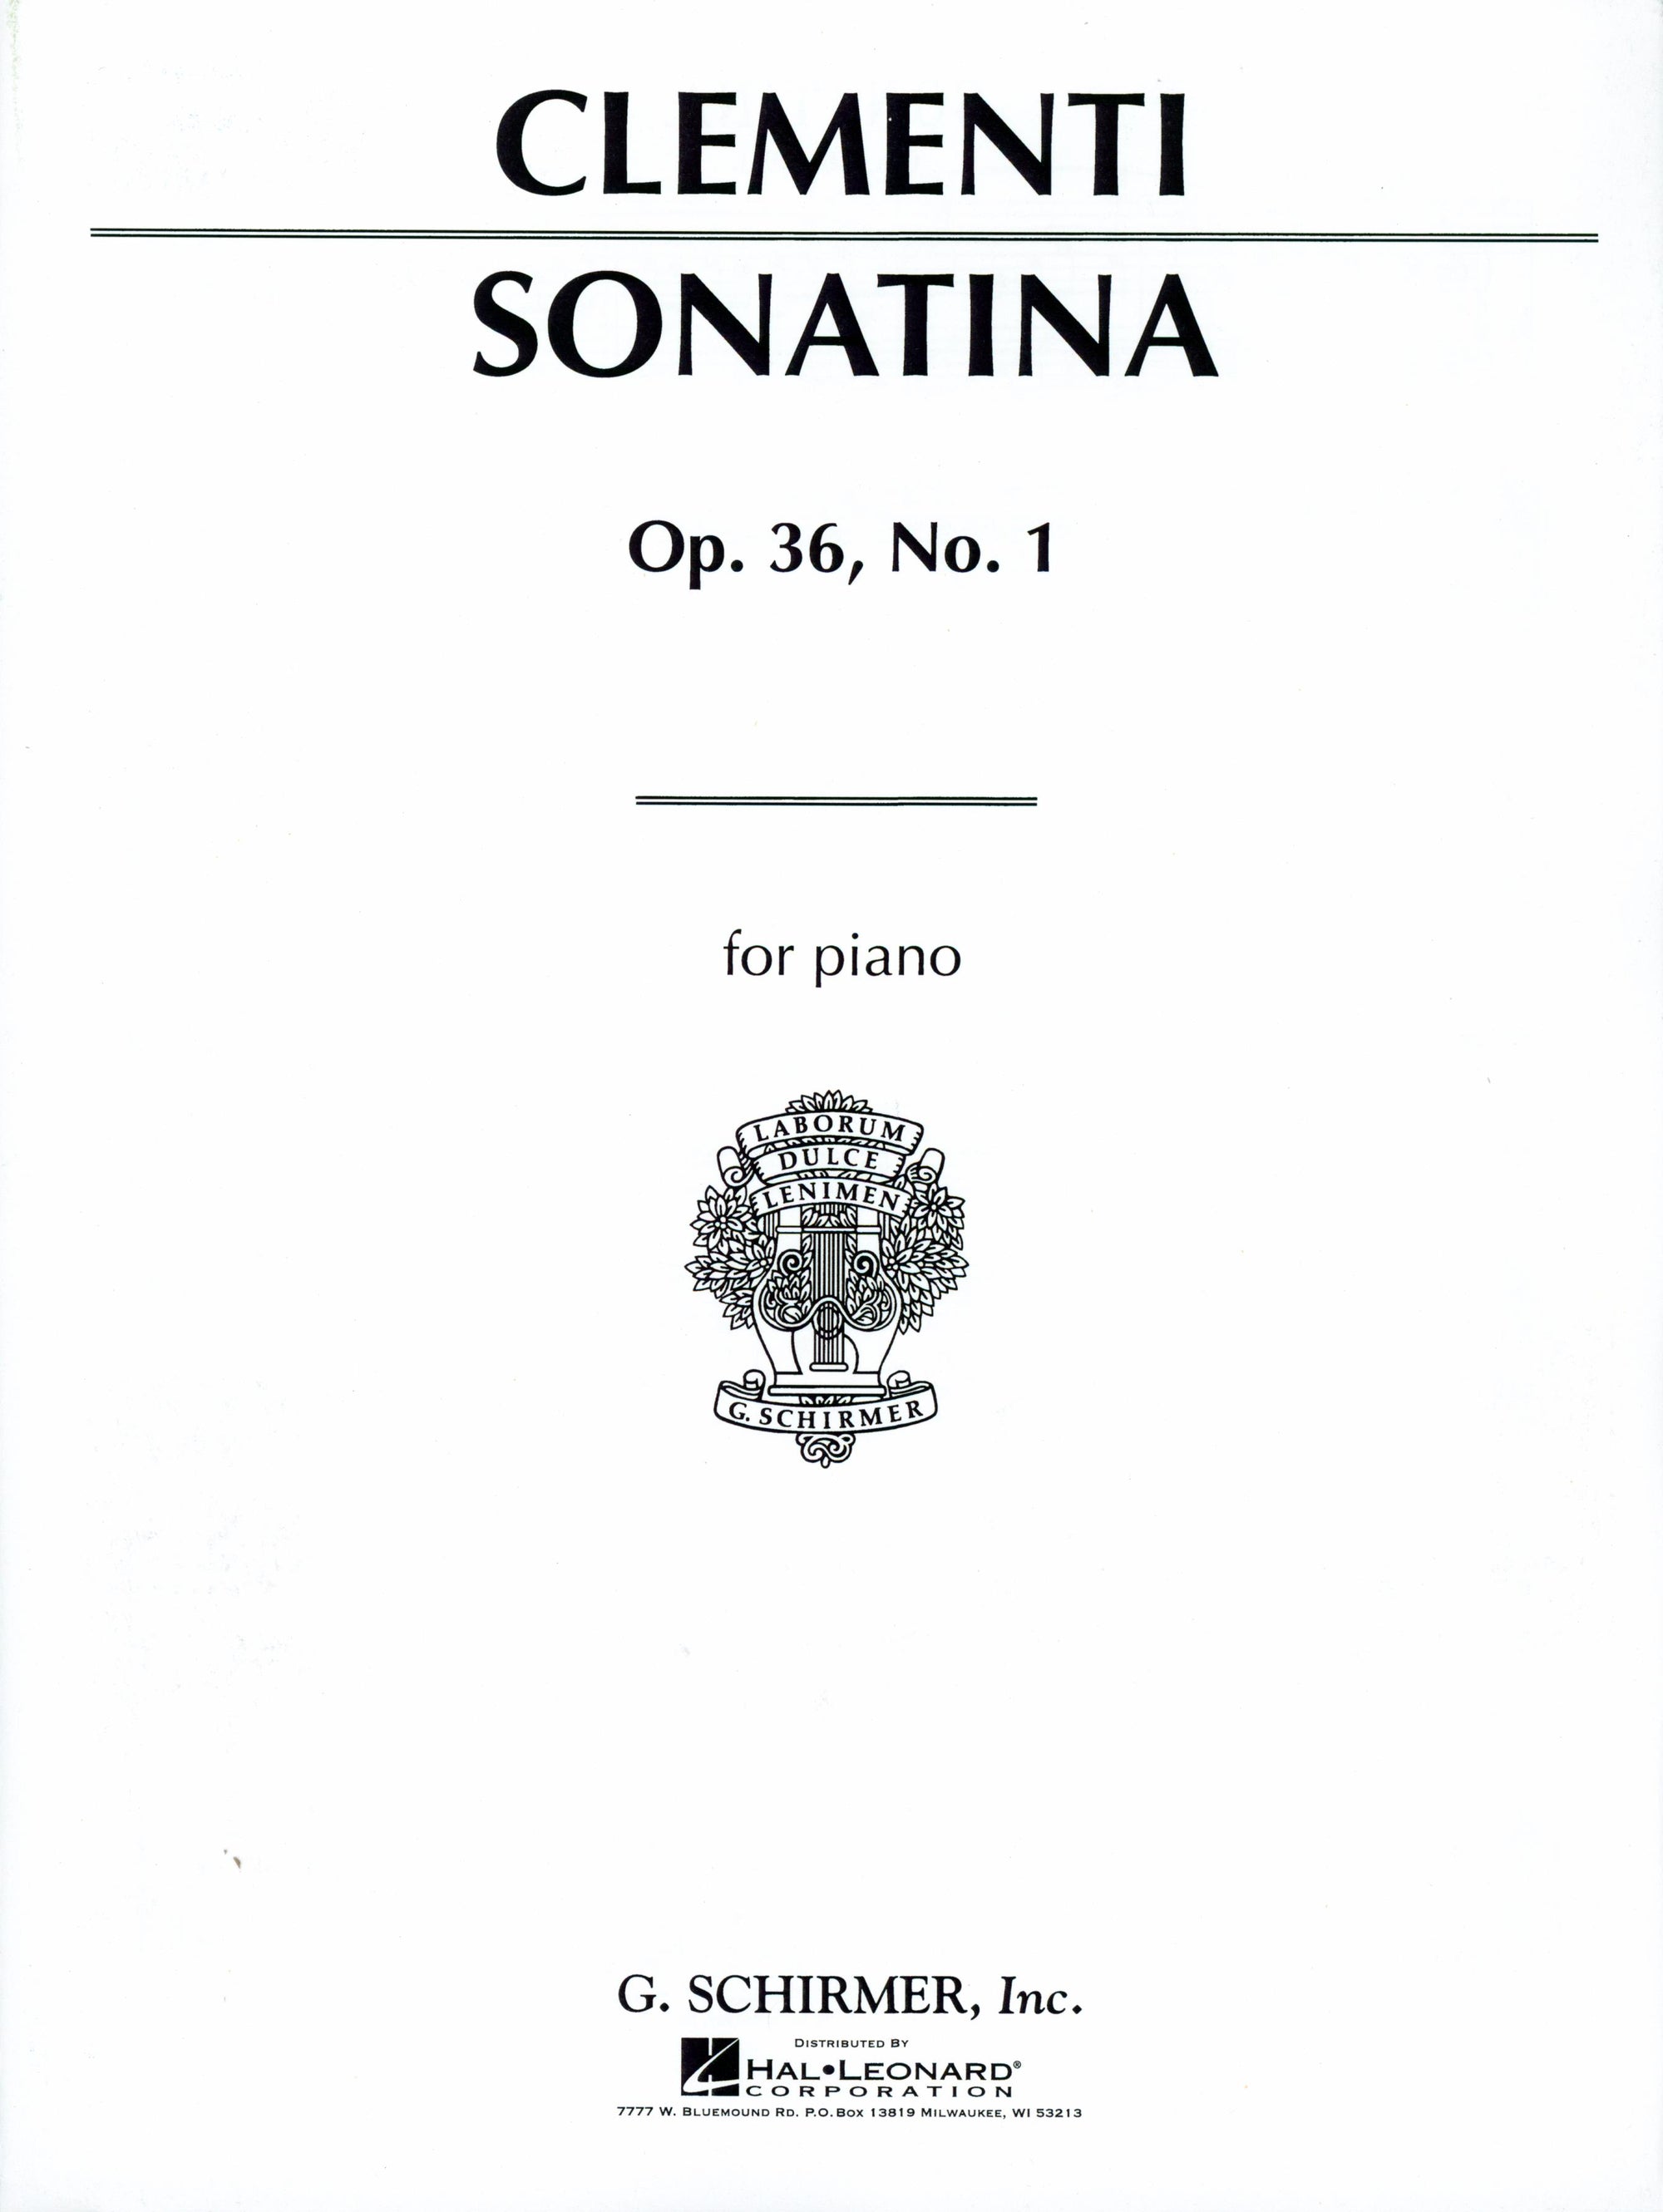 Clementi: Piano Sonatina in C Major, Op. 36, No. 1